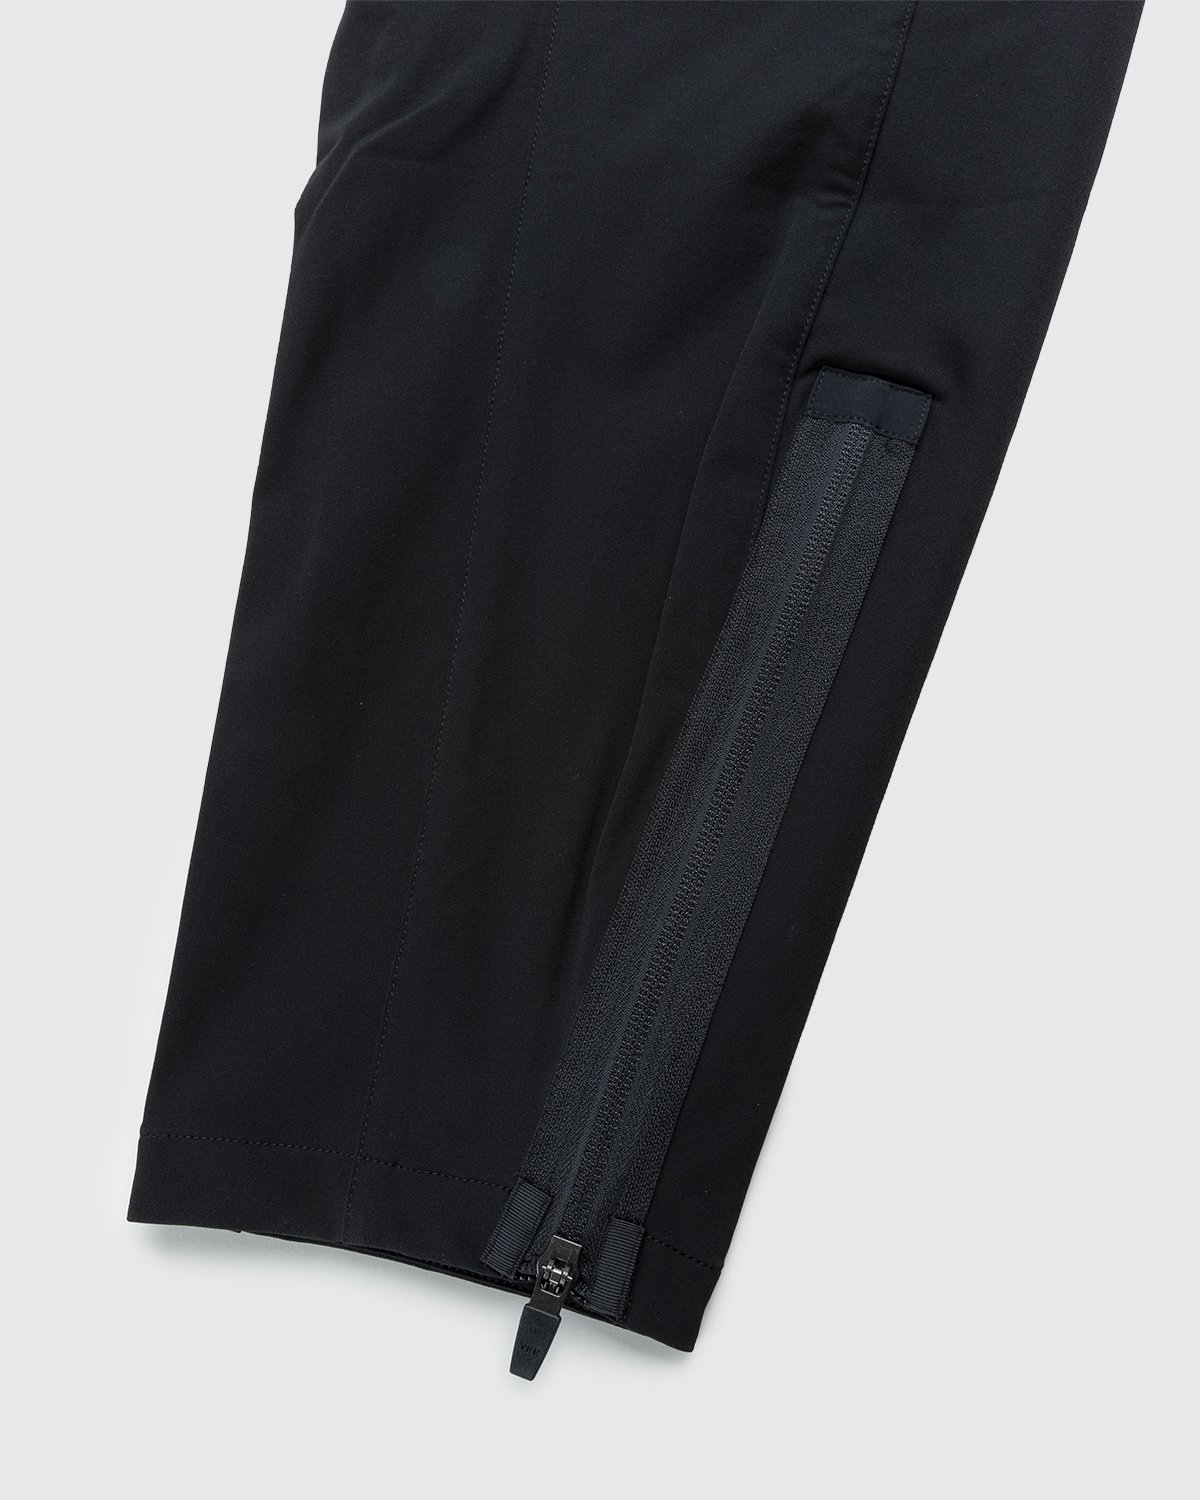 ACRONYM - P41-DS Schoeller Dryskin Articulated Cargo Trouser Black - Clothing - Black - Image 9